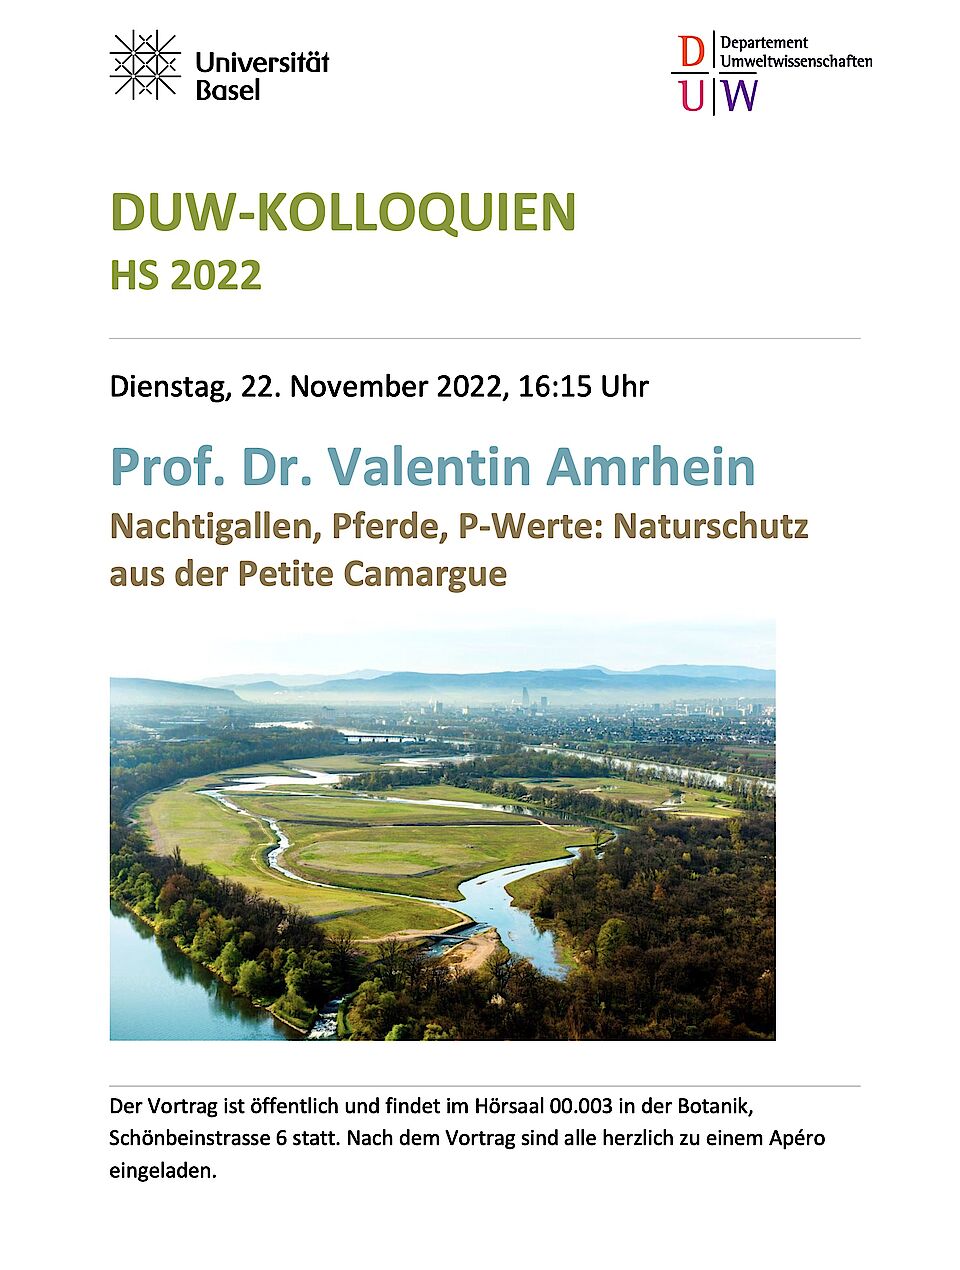 DUW-Kolloquium HS2022 Amrhein